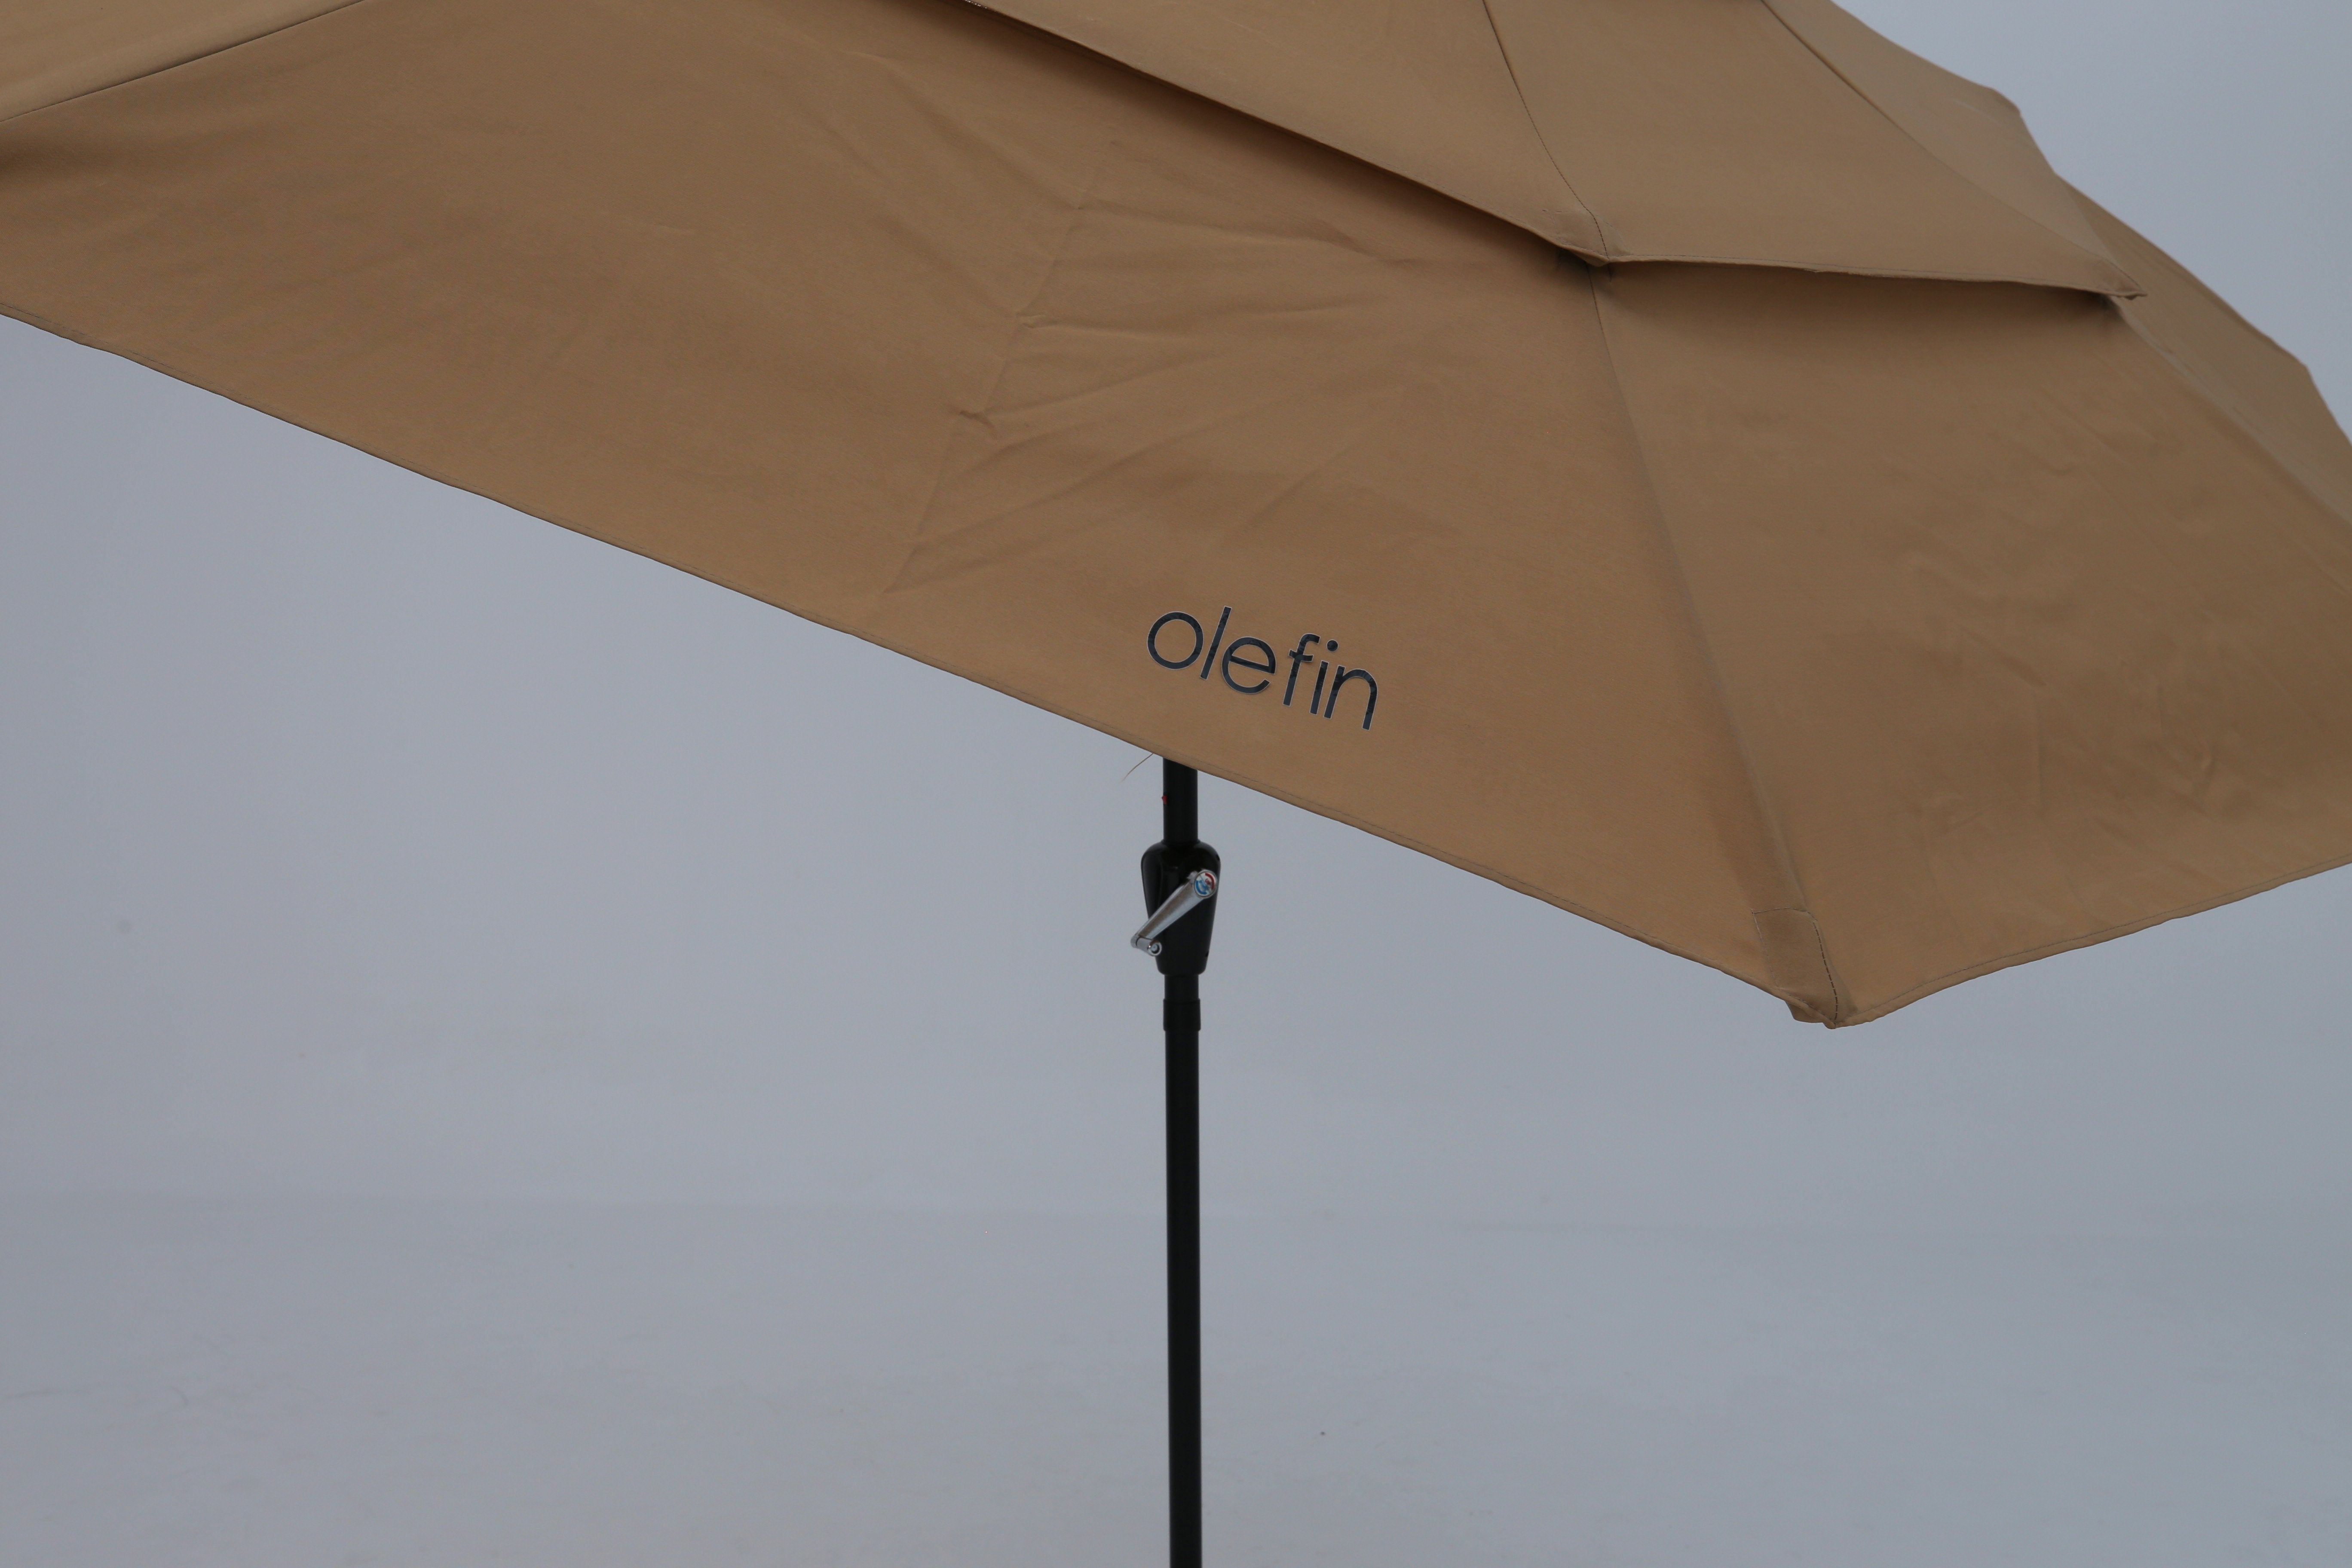 Olefin 3 Tiers Market Umbrella Patio Umbrella - ABC-CANOPY